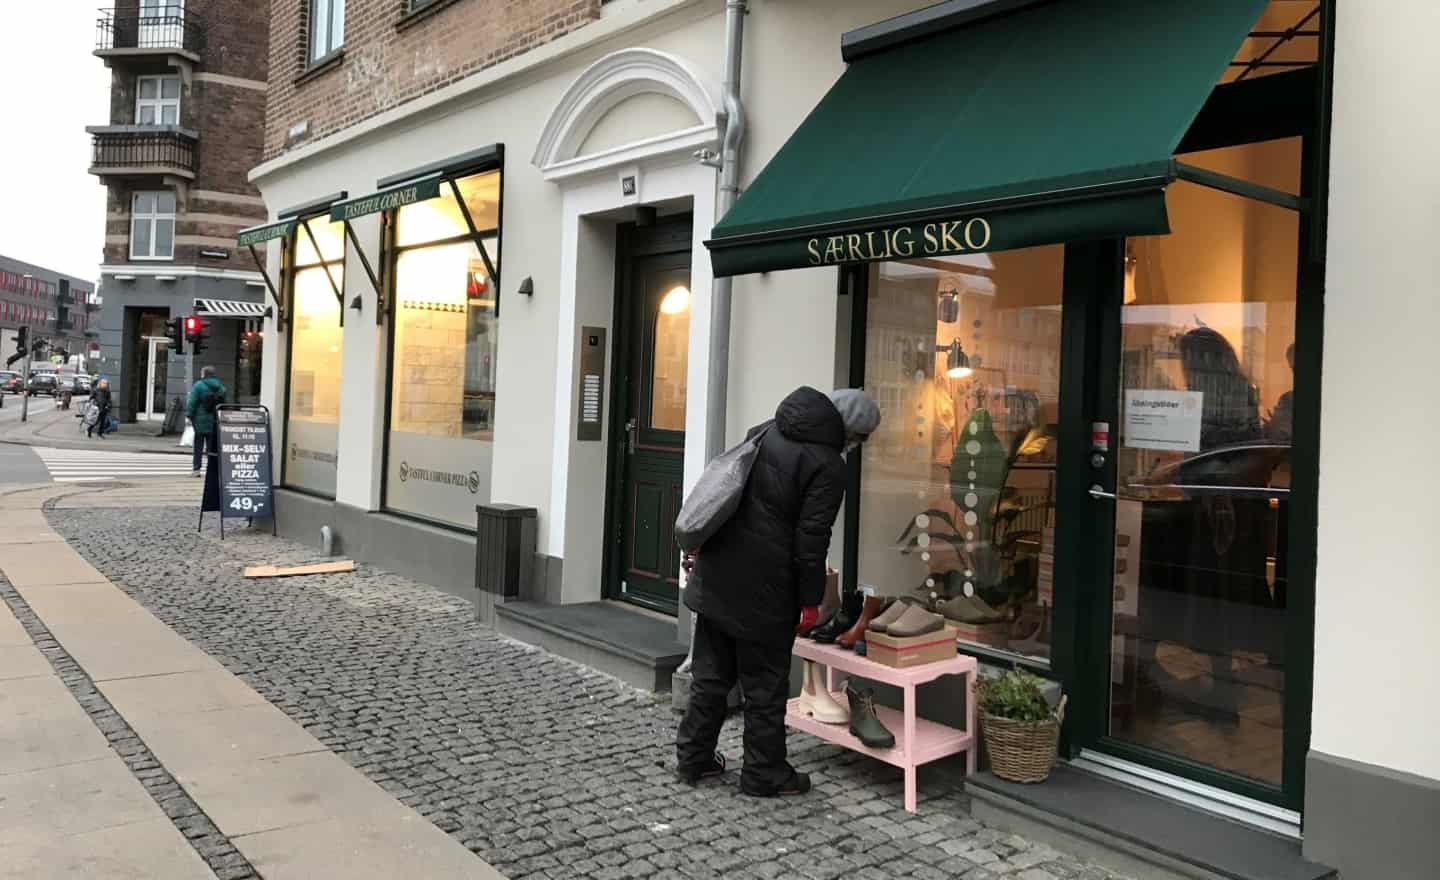 lille ny butik: - Jeg synes det har manglet i Valby | valbyliv.dk